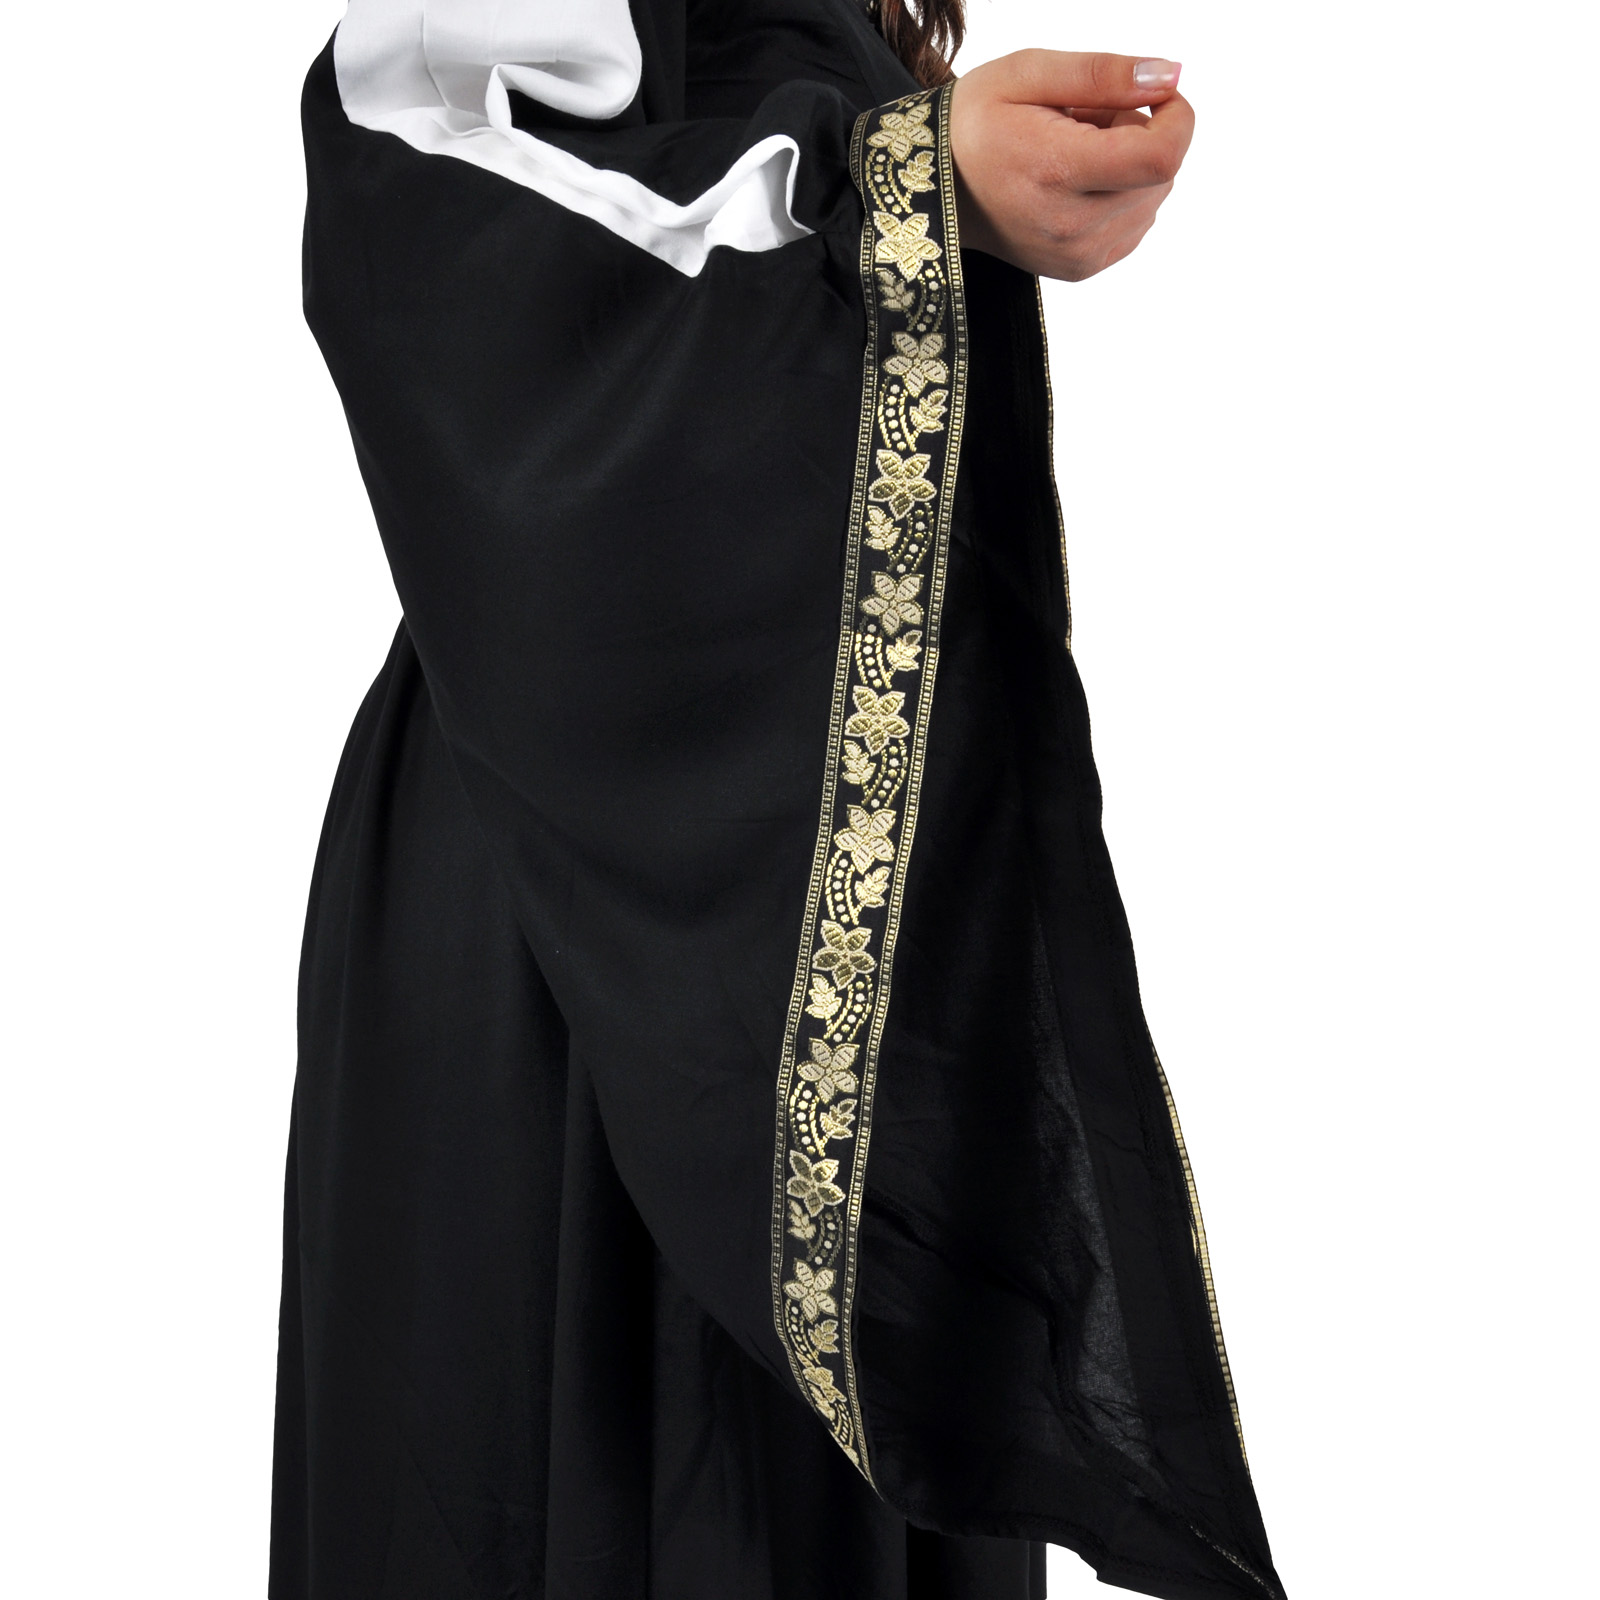 Medieval dress Leila black